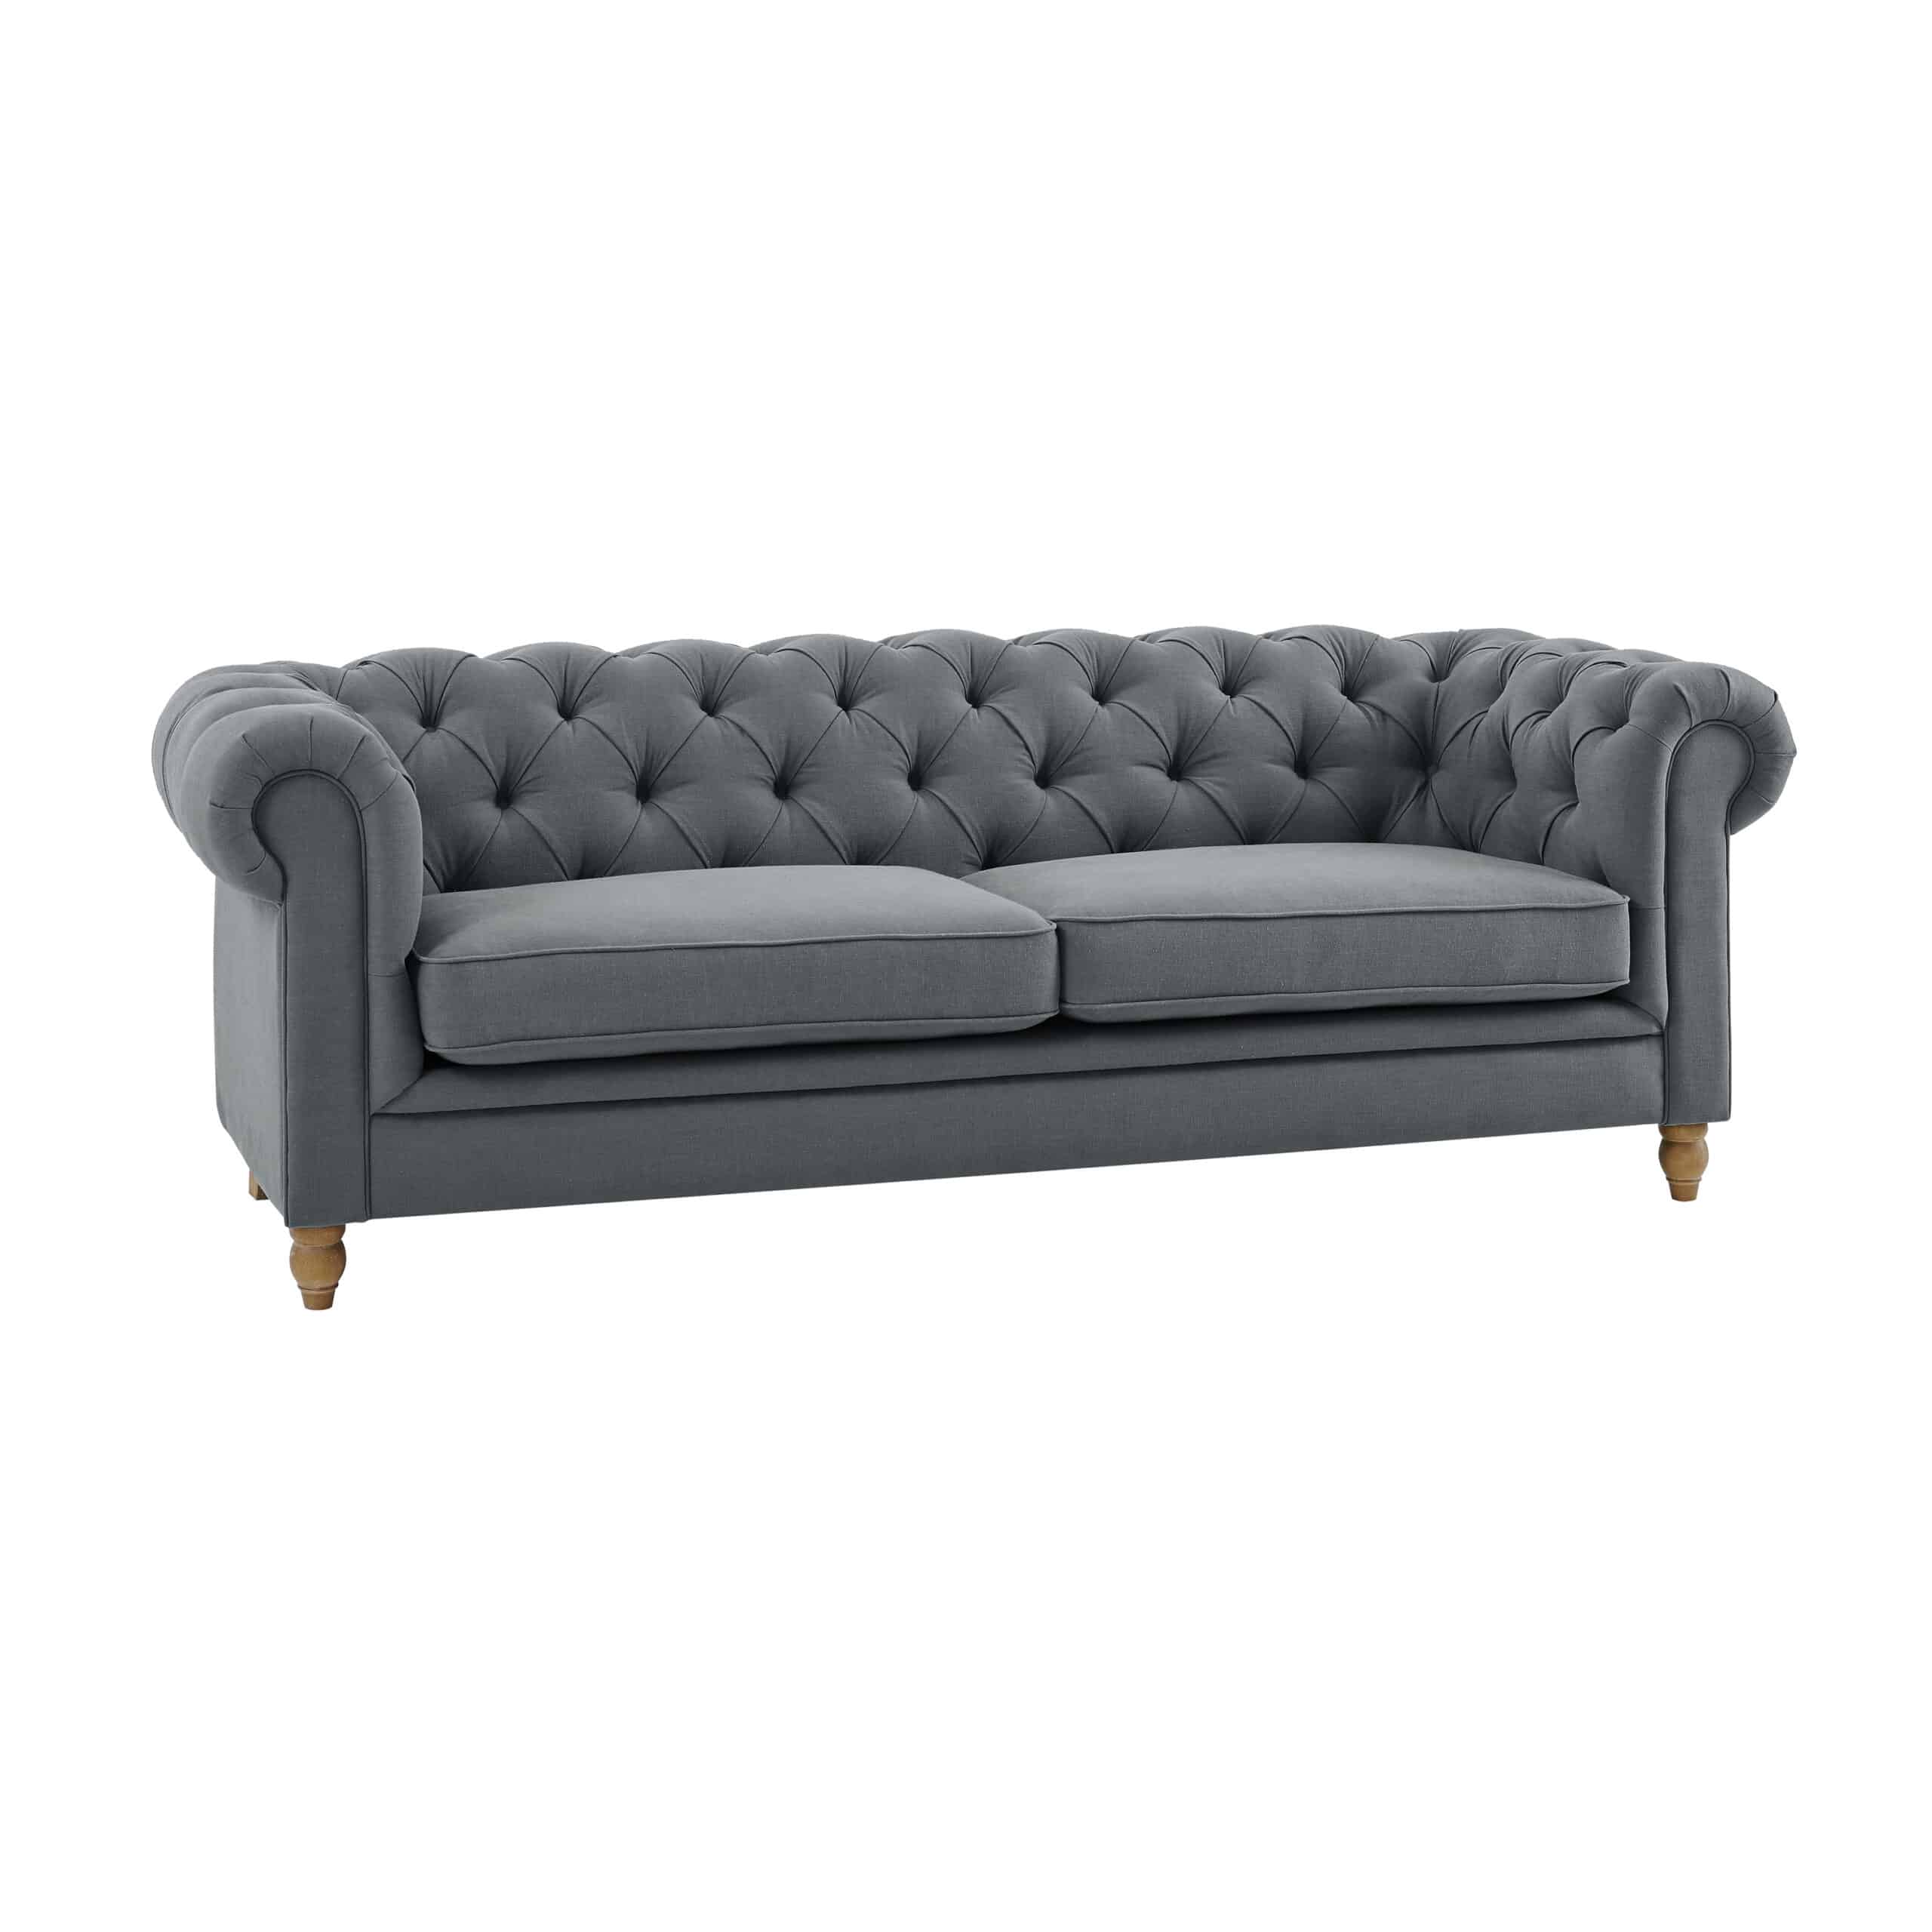 Amelia Grey Linen Chesterfield Sofa